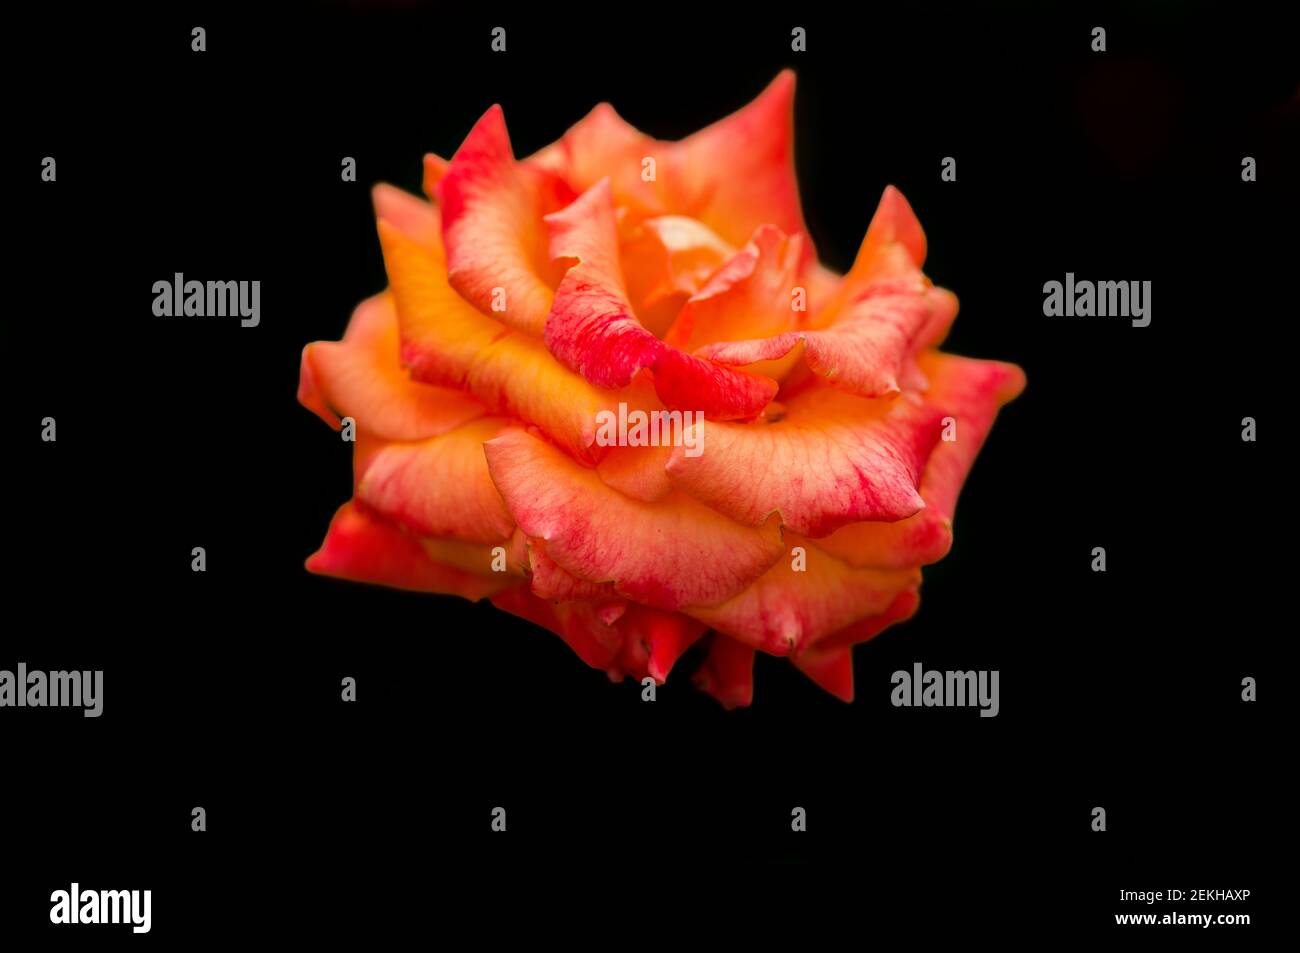 Close-up of orange rose flower against black background Stock Photo